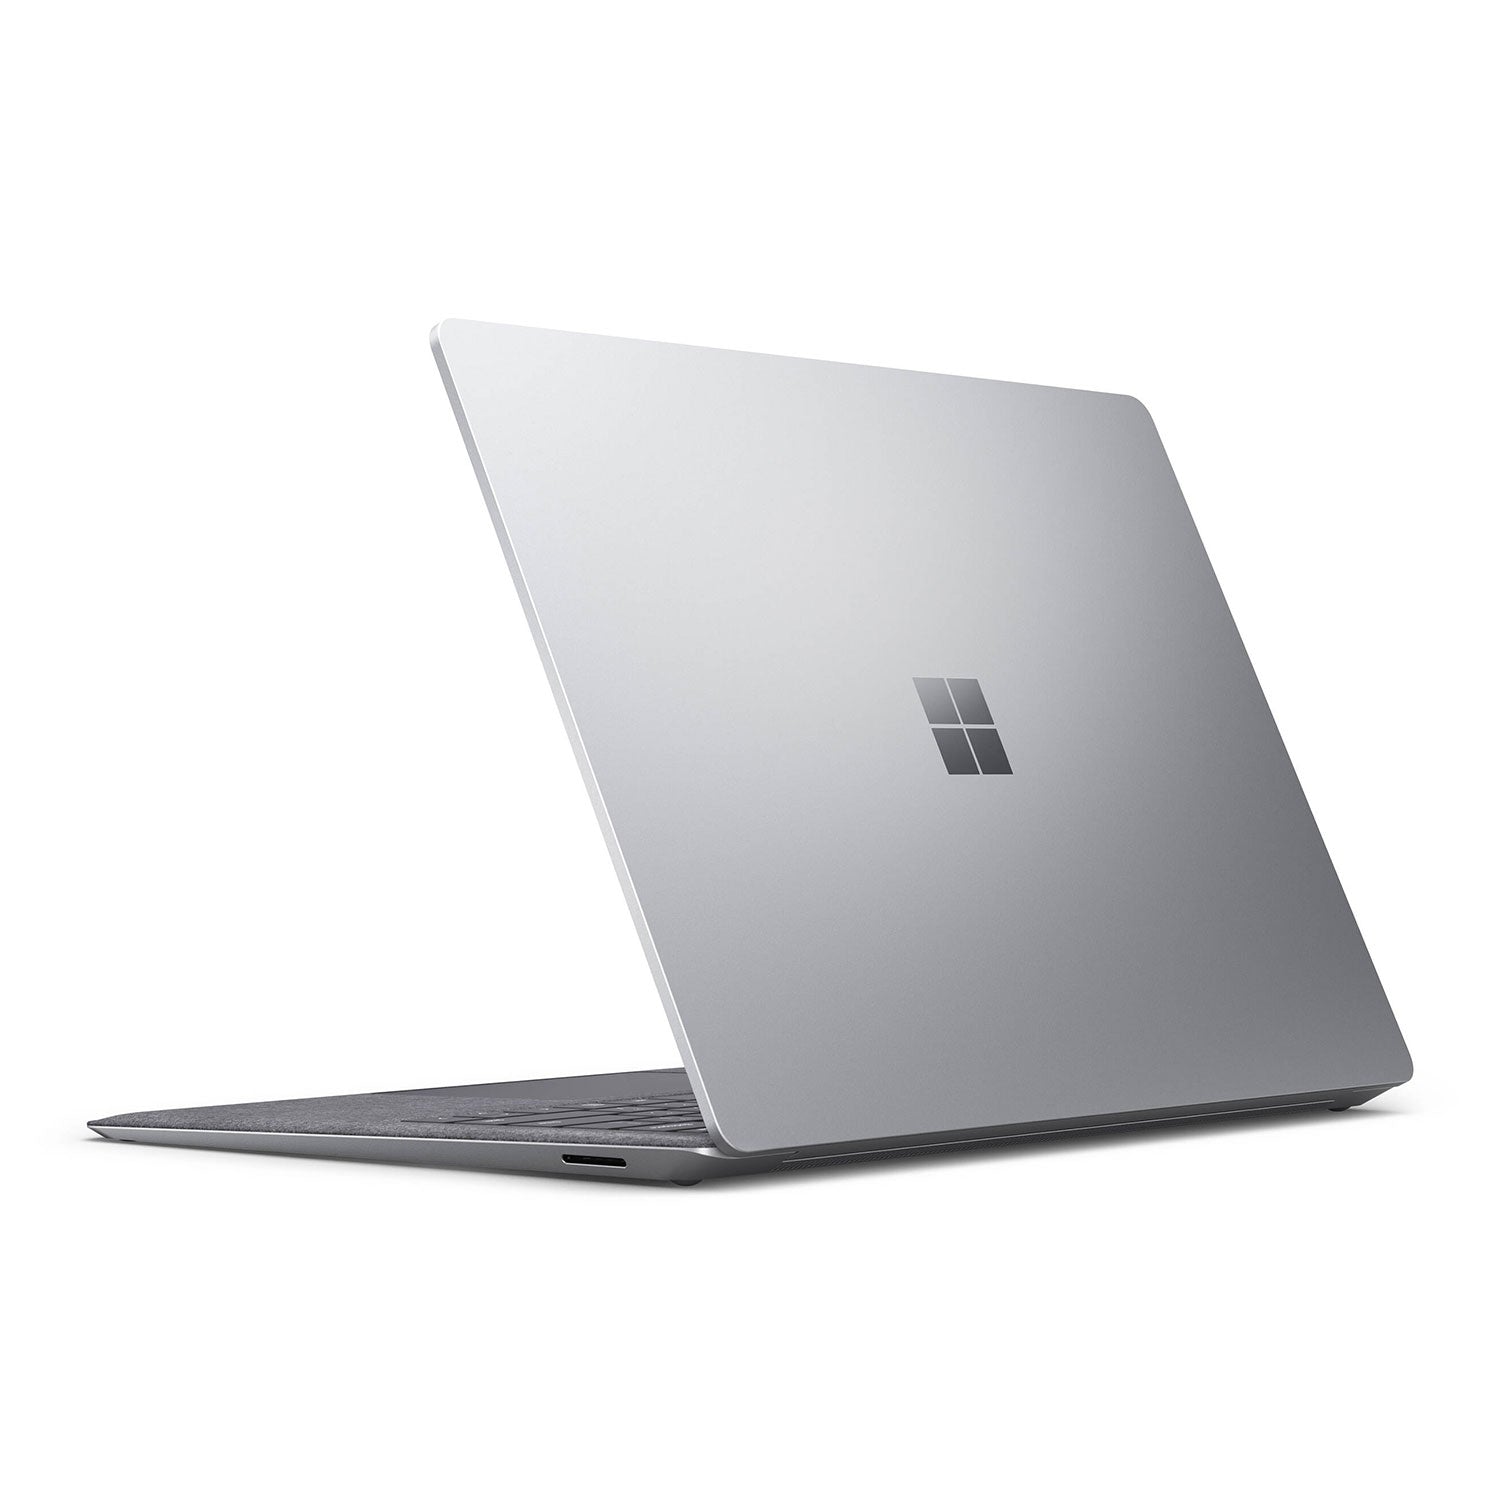 Microsoft Surface 4 13" AMD Ryzen 5 8GB Laptop, Platinum